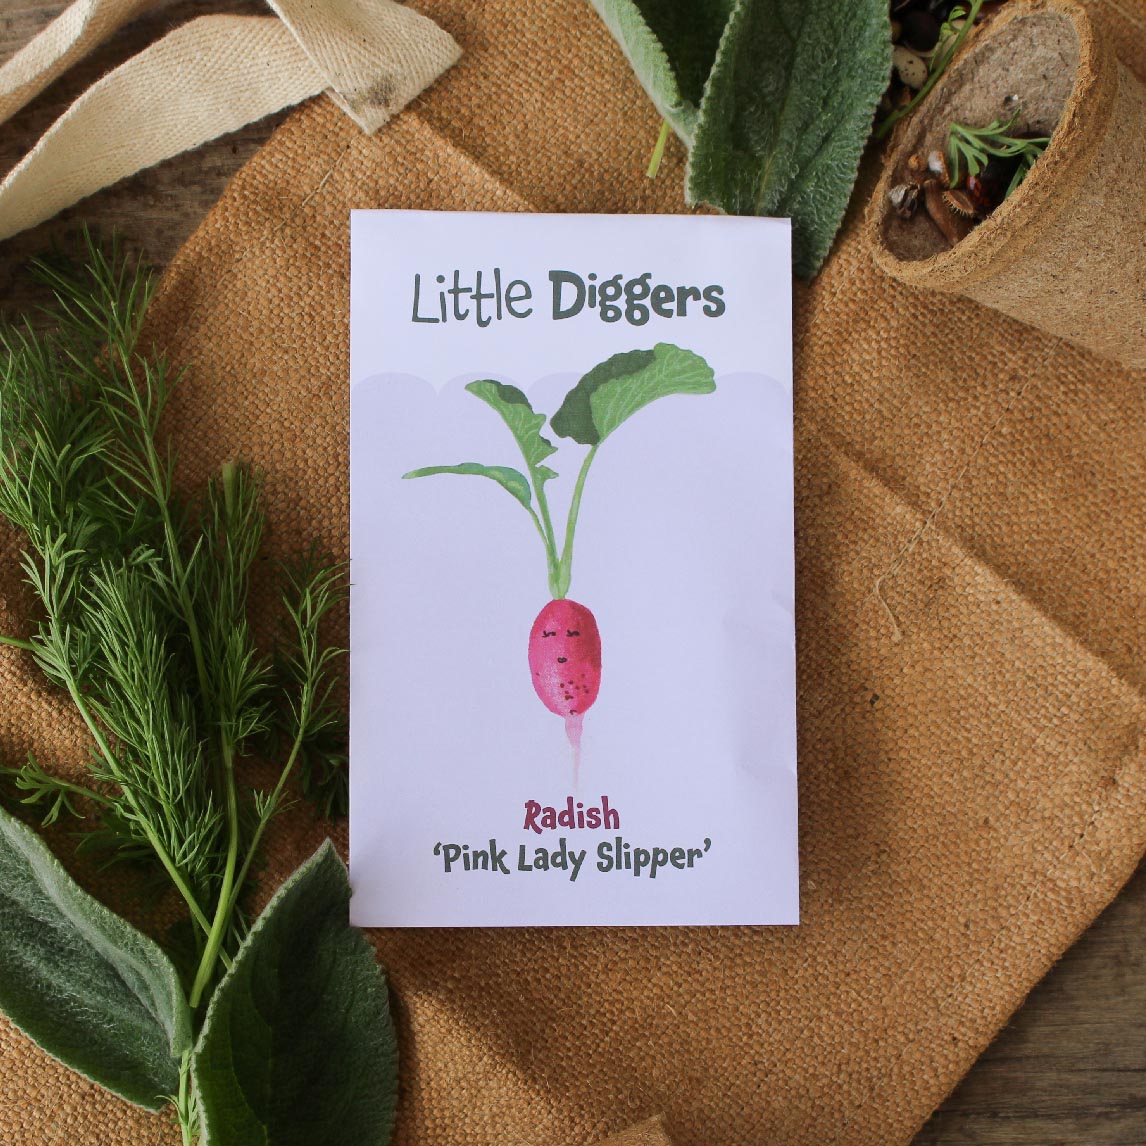 Little Diggers Radish 'Pink Lady Slipper' (Organic)